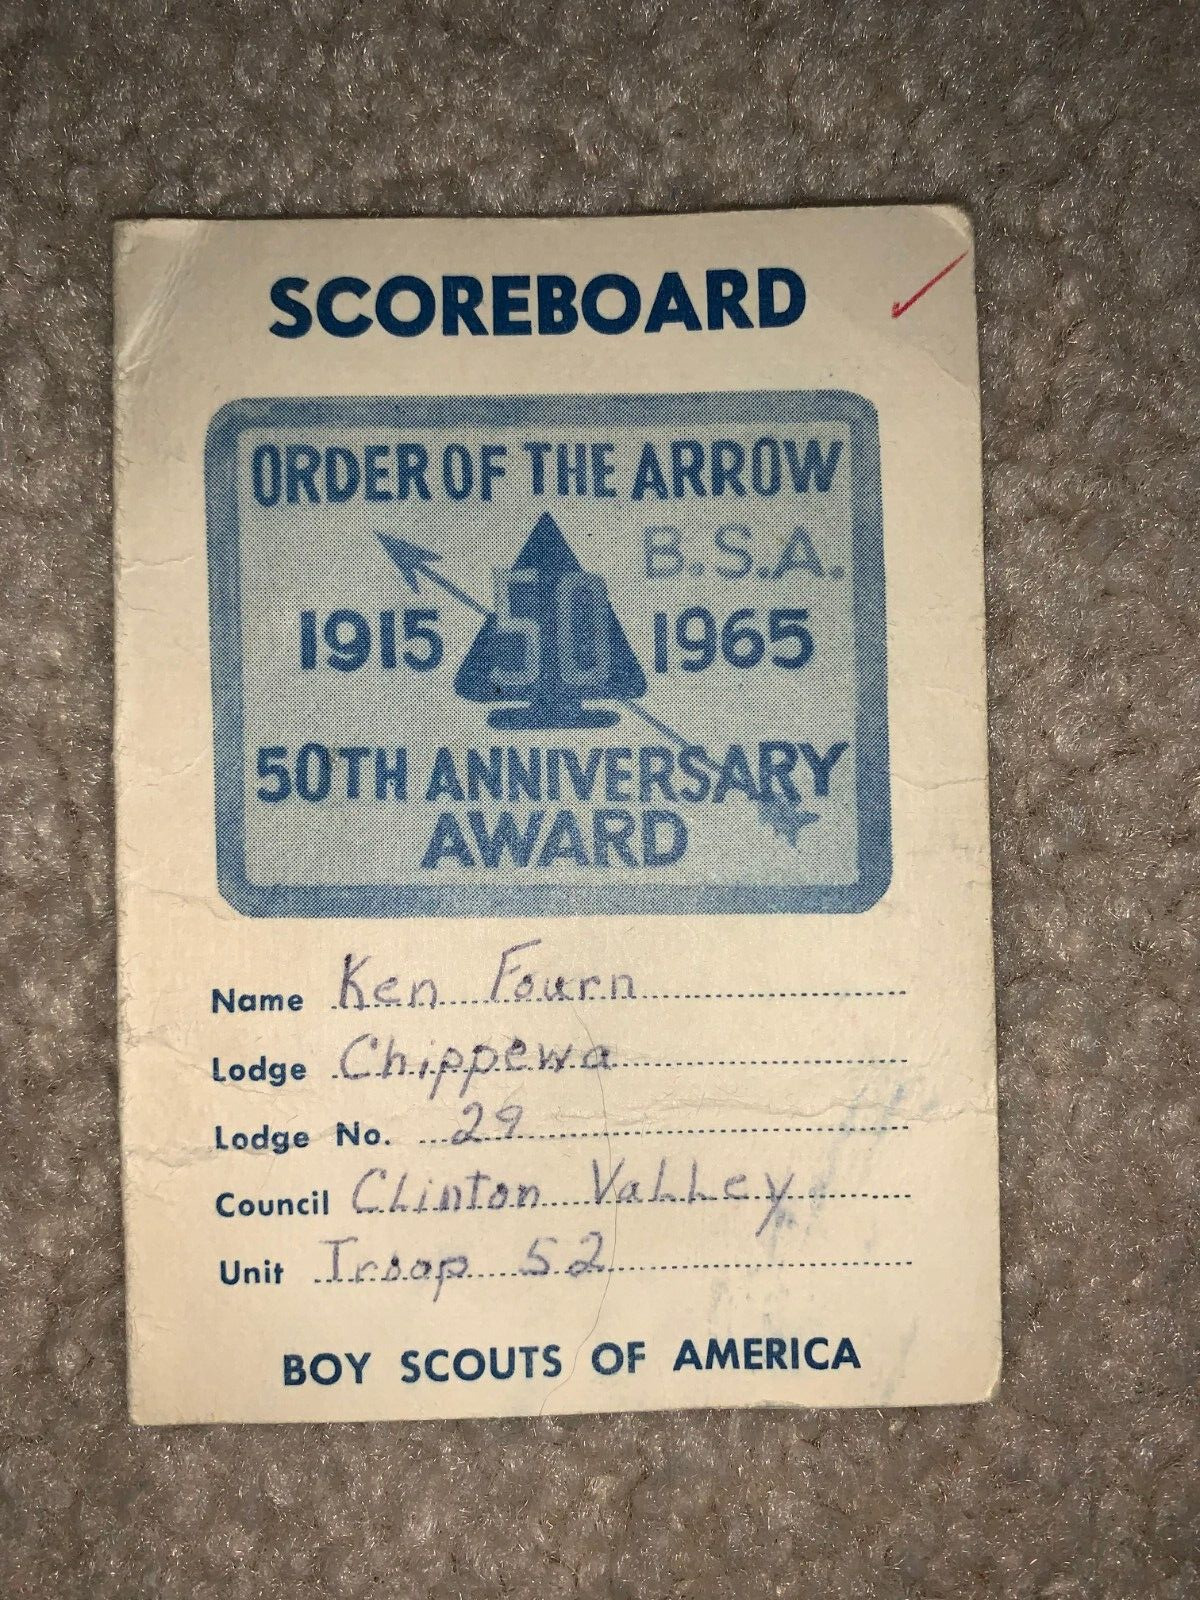 Boy Scout 1915 1965 50th Award OA Lodge 29 Clinton Valley Michigan Council Card